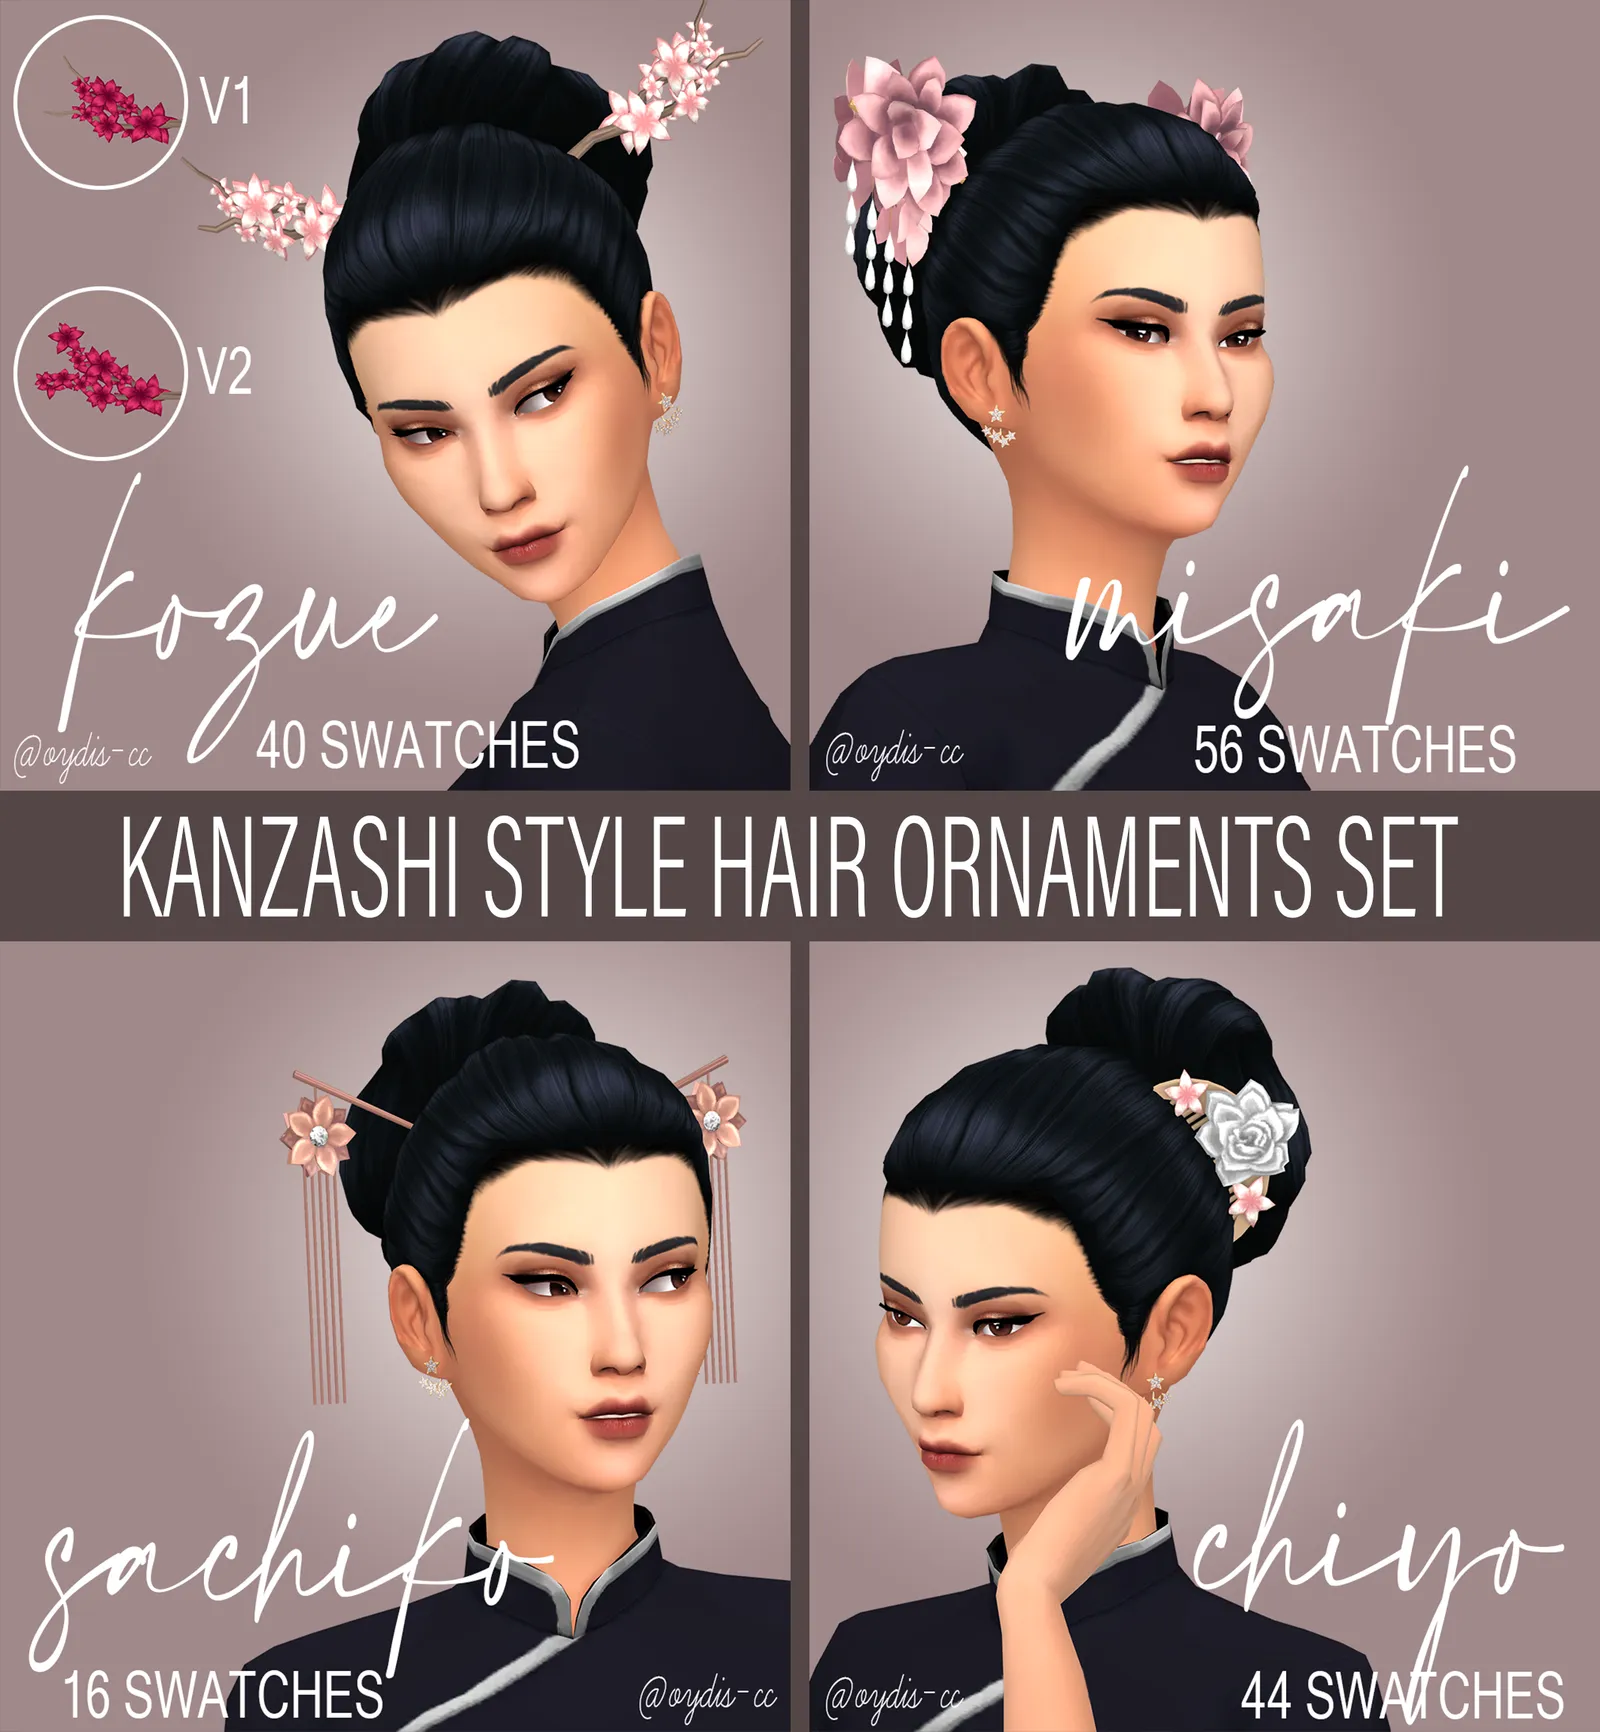 Kanzashi Style Hair Ornaments Set